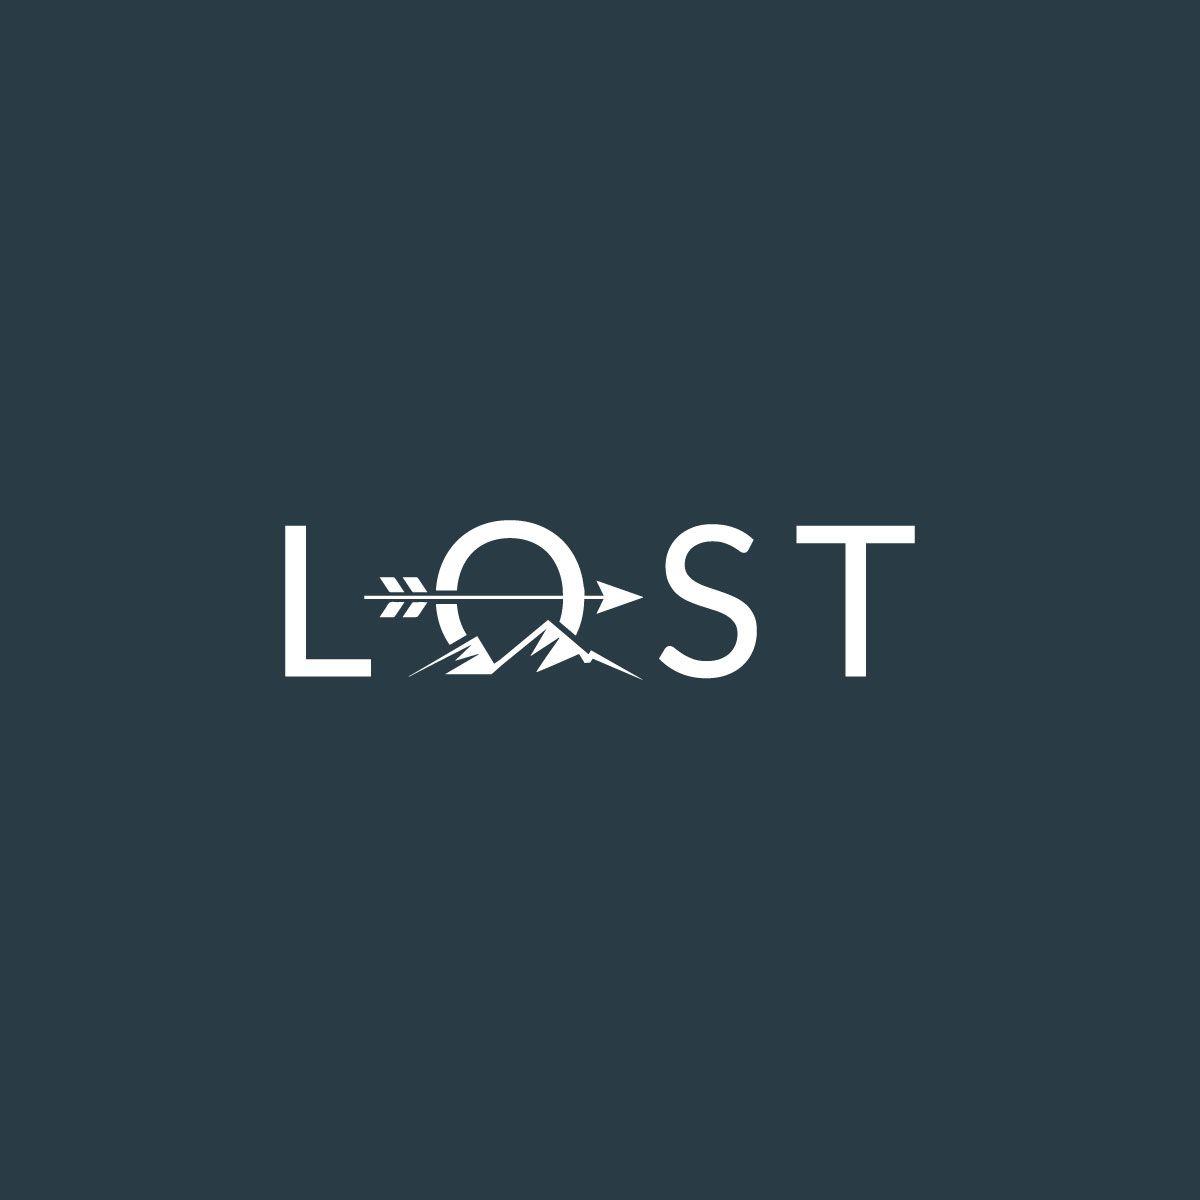 Lost Logo - Modern, Bold, Apparel Store Logo Design for LOST by Winningentry ...